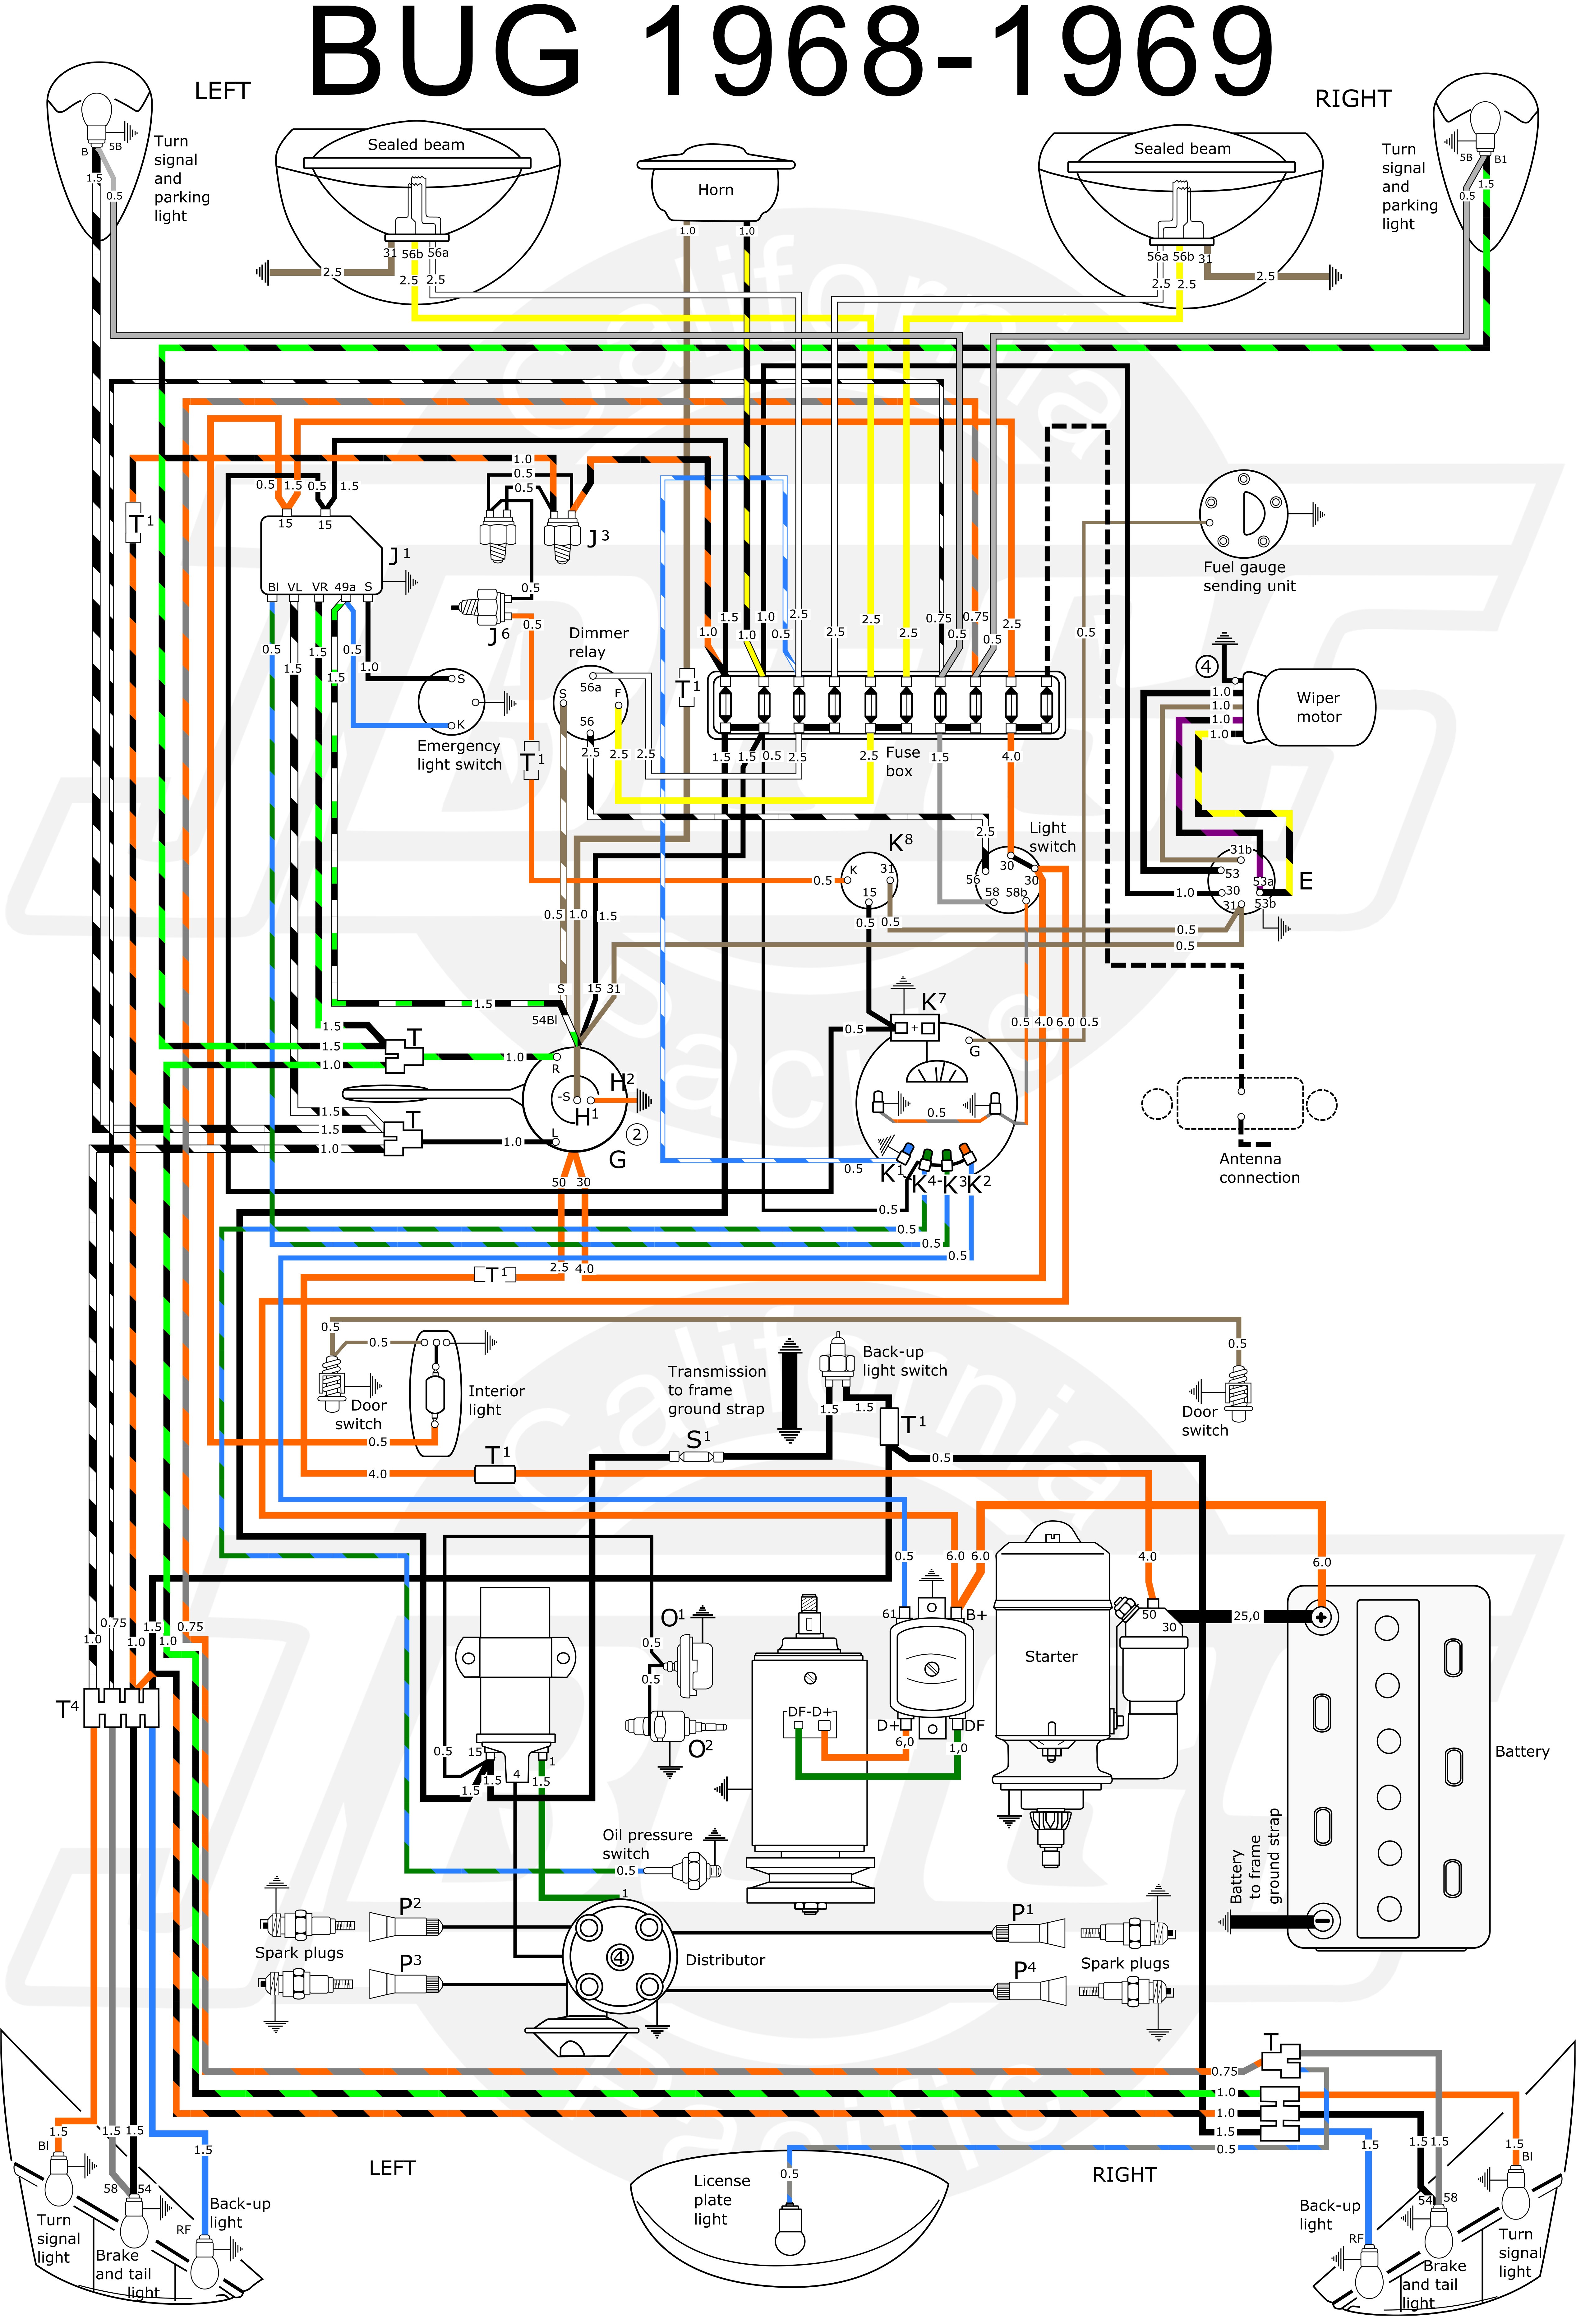 Vw Engine Diagram Vw Beetle Turn Signal Wiring Diagram 1973 Vw Wiring Diagram Vw Of Vw Engine Diagram